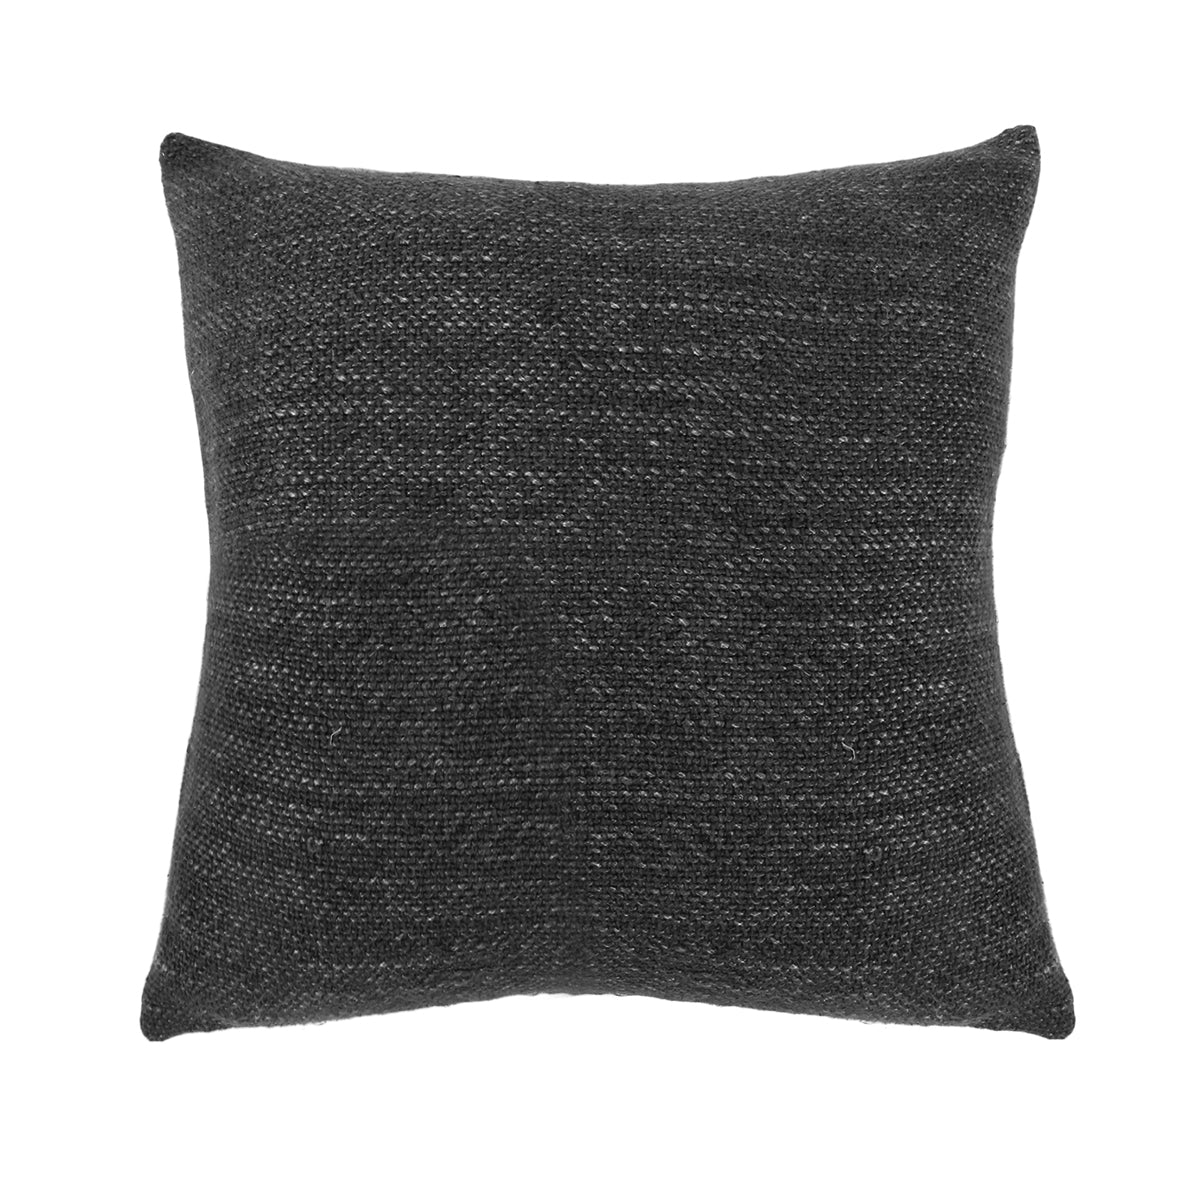 Hendrick Square Pillow, Charcoal